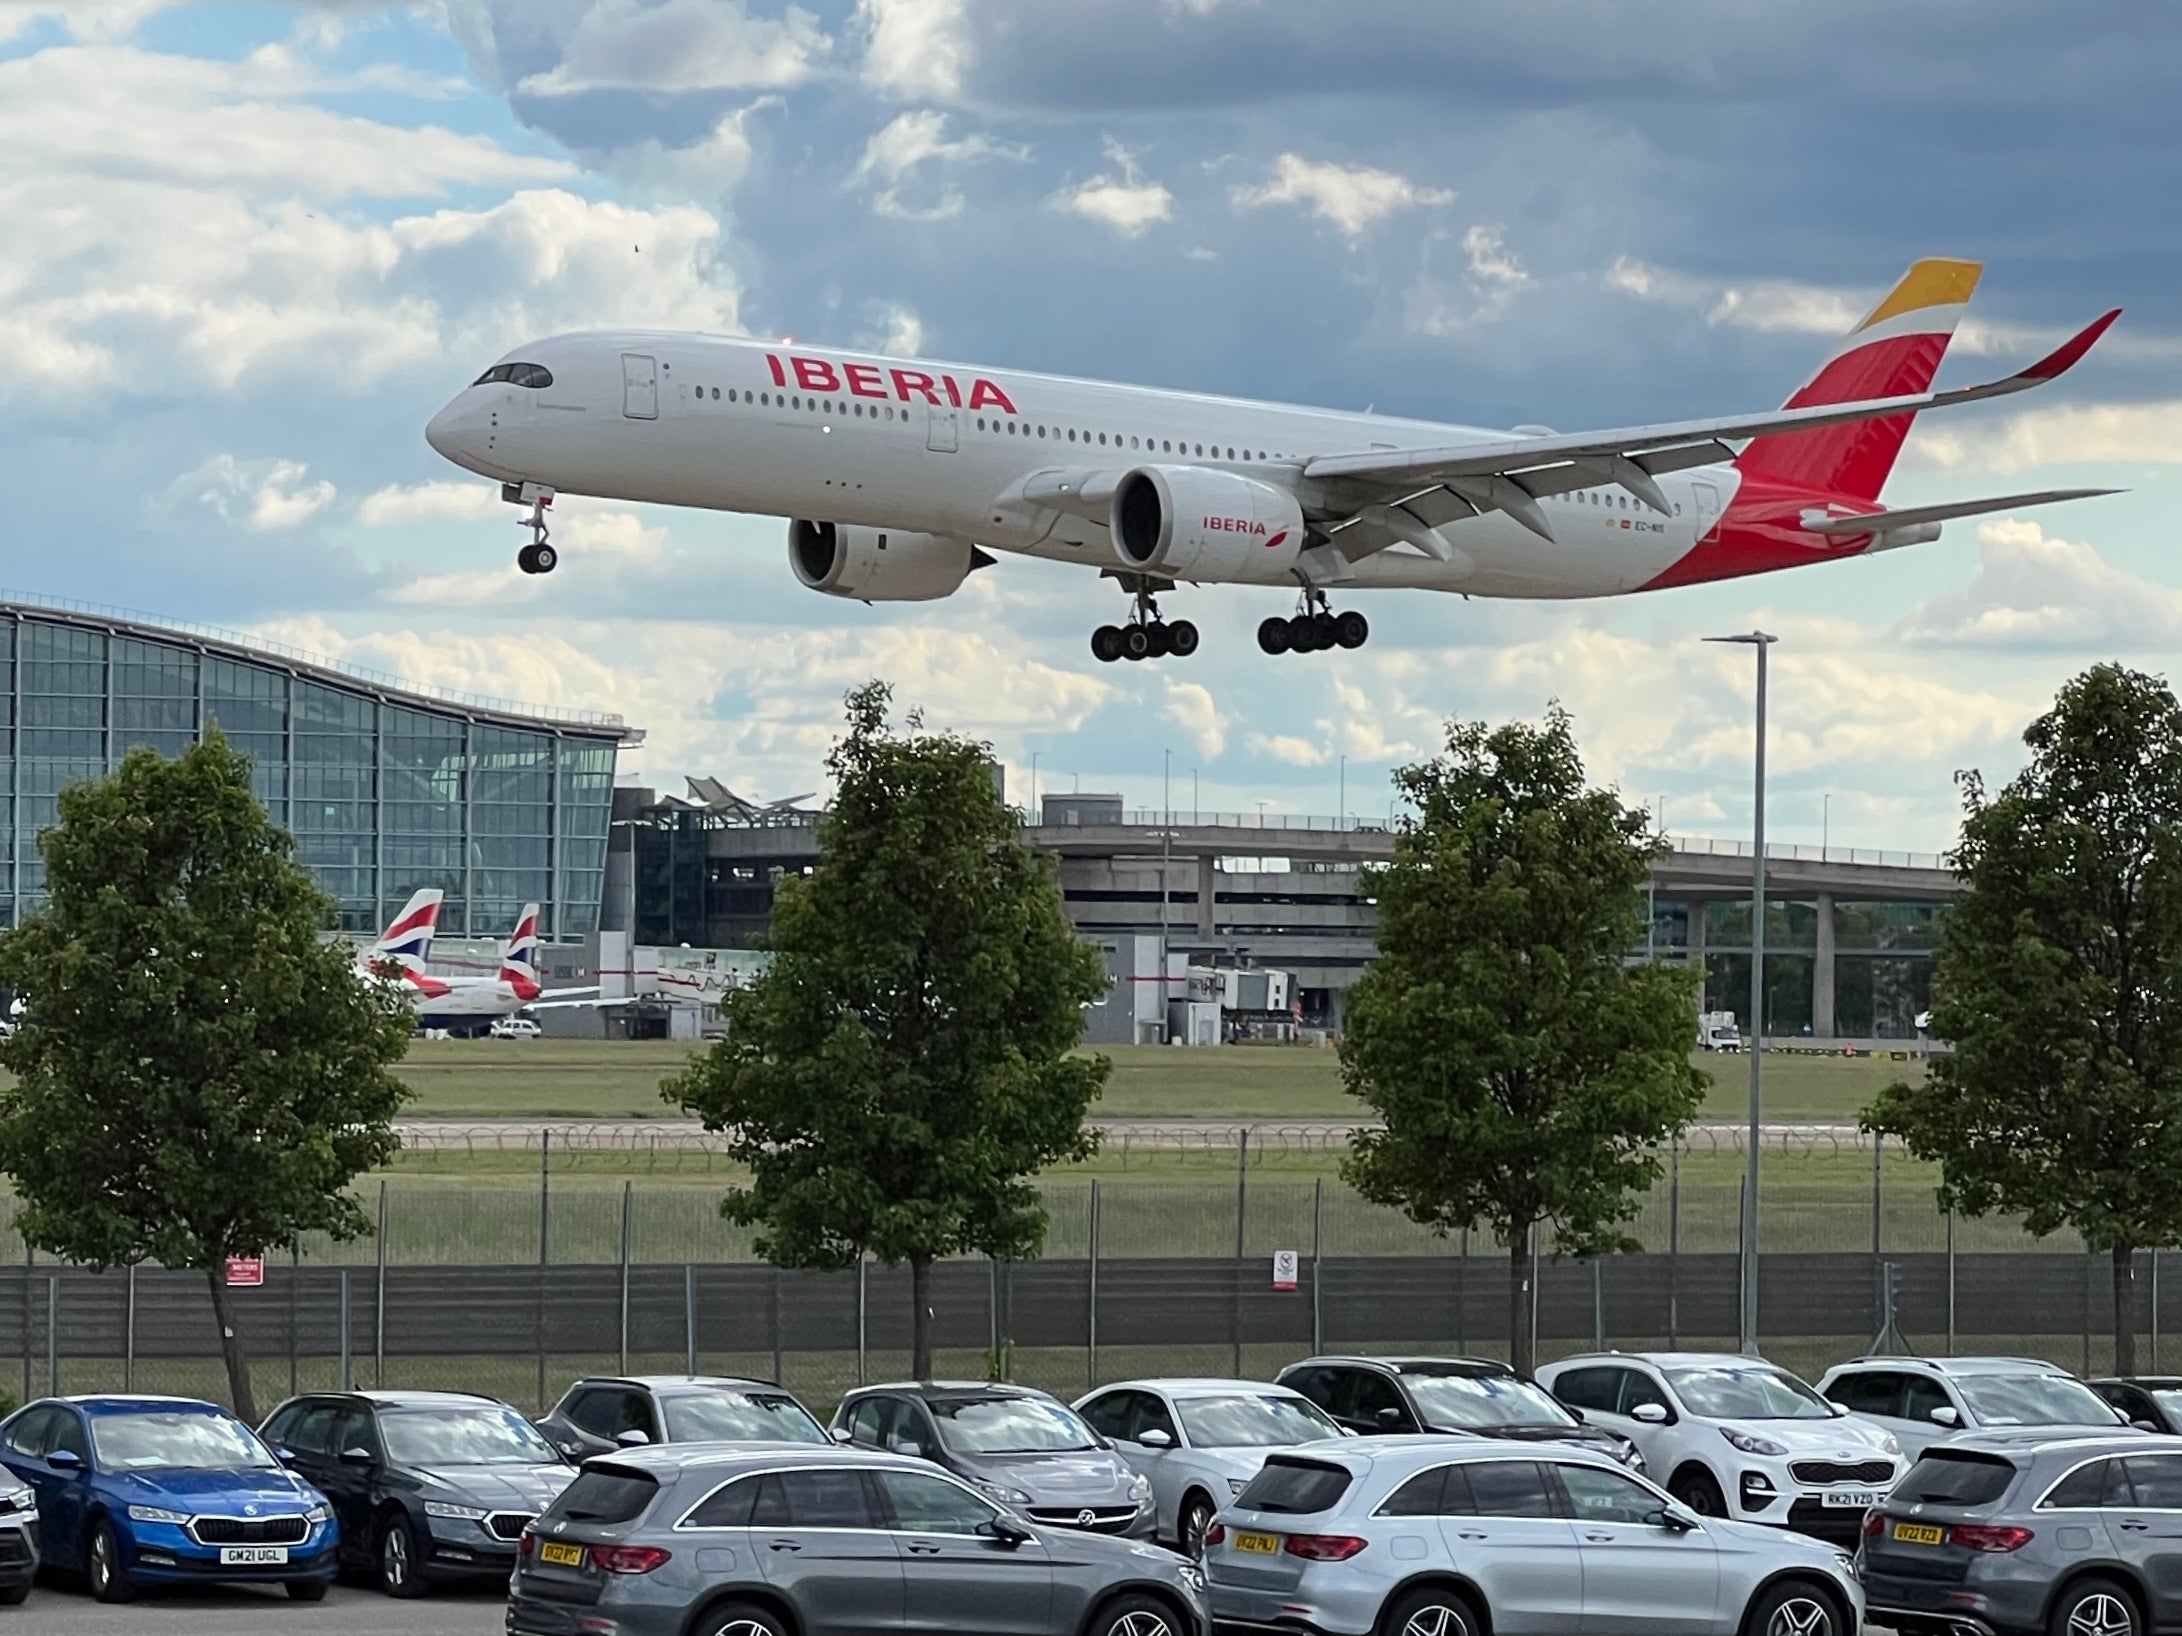 Helping out: an Iberia aircraft landing at London Heathrow